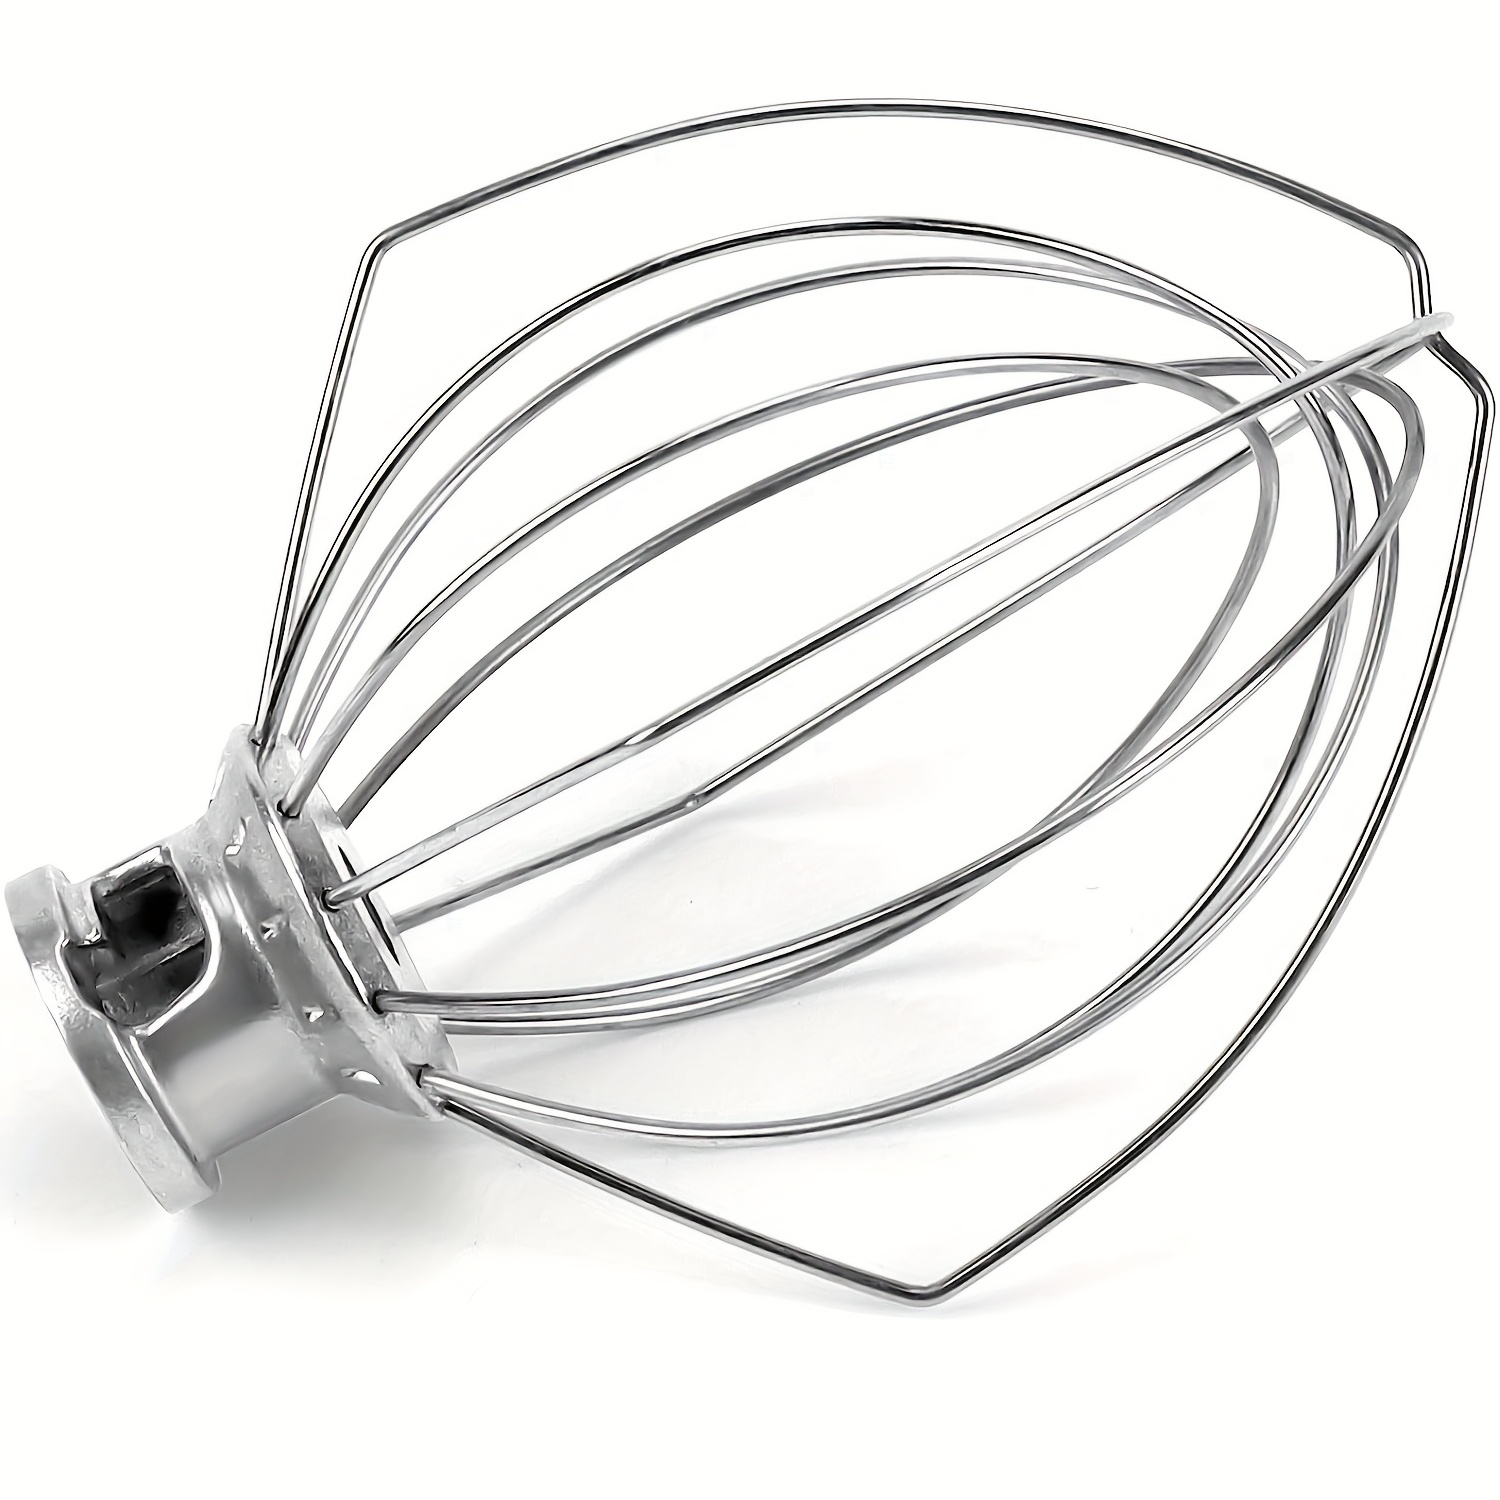 KitchenAid Tilt-Head Stand Mixer Stainless Steel Wire Whip